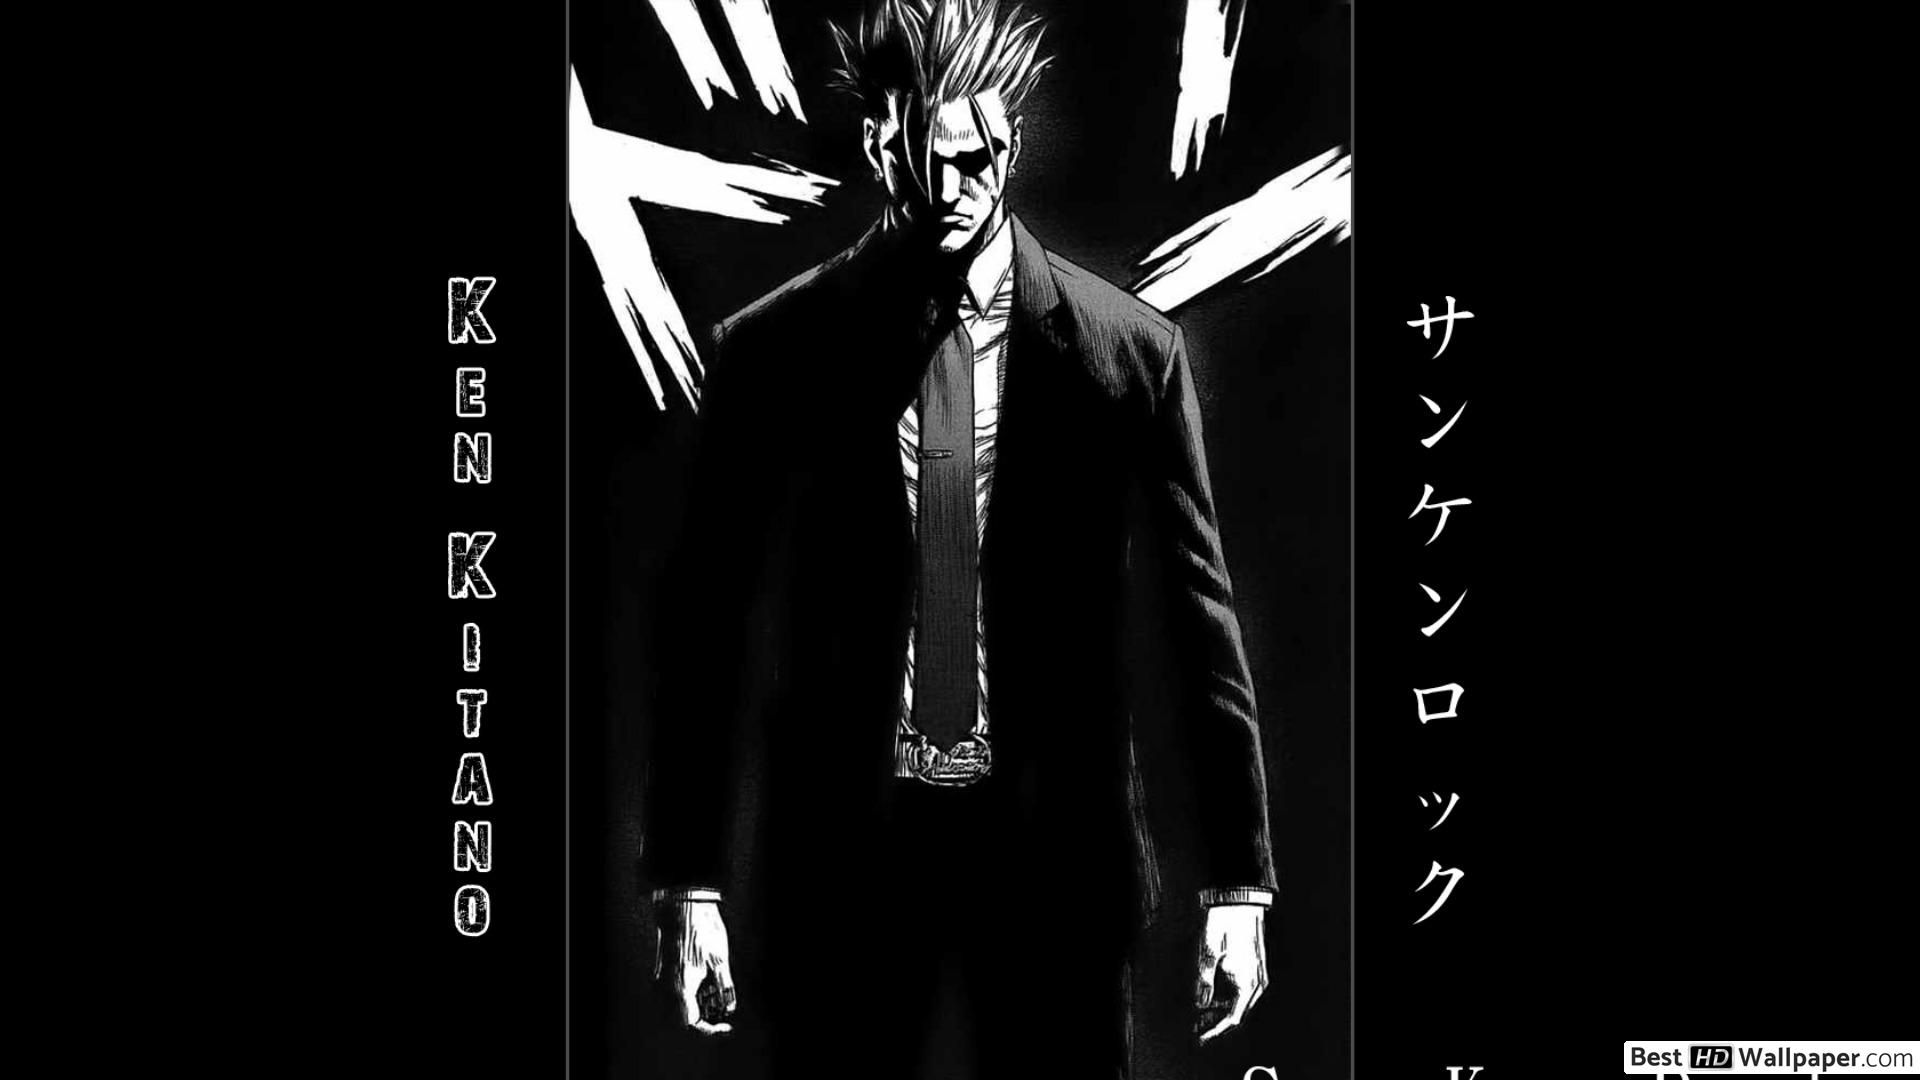 Sun Ken Rock Kitano Manga Cover HD wallpaper download